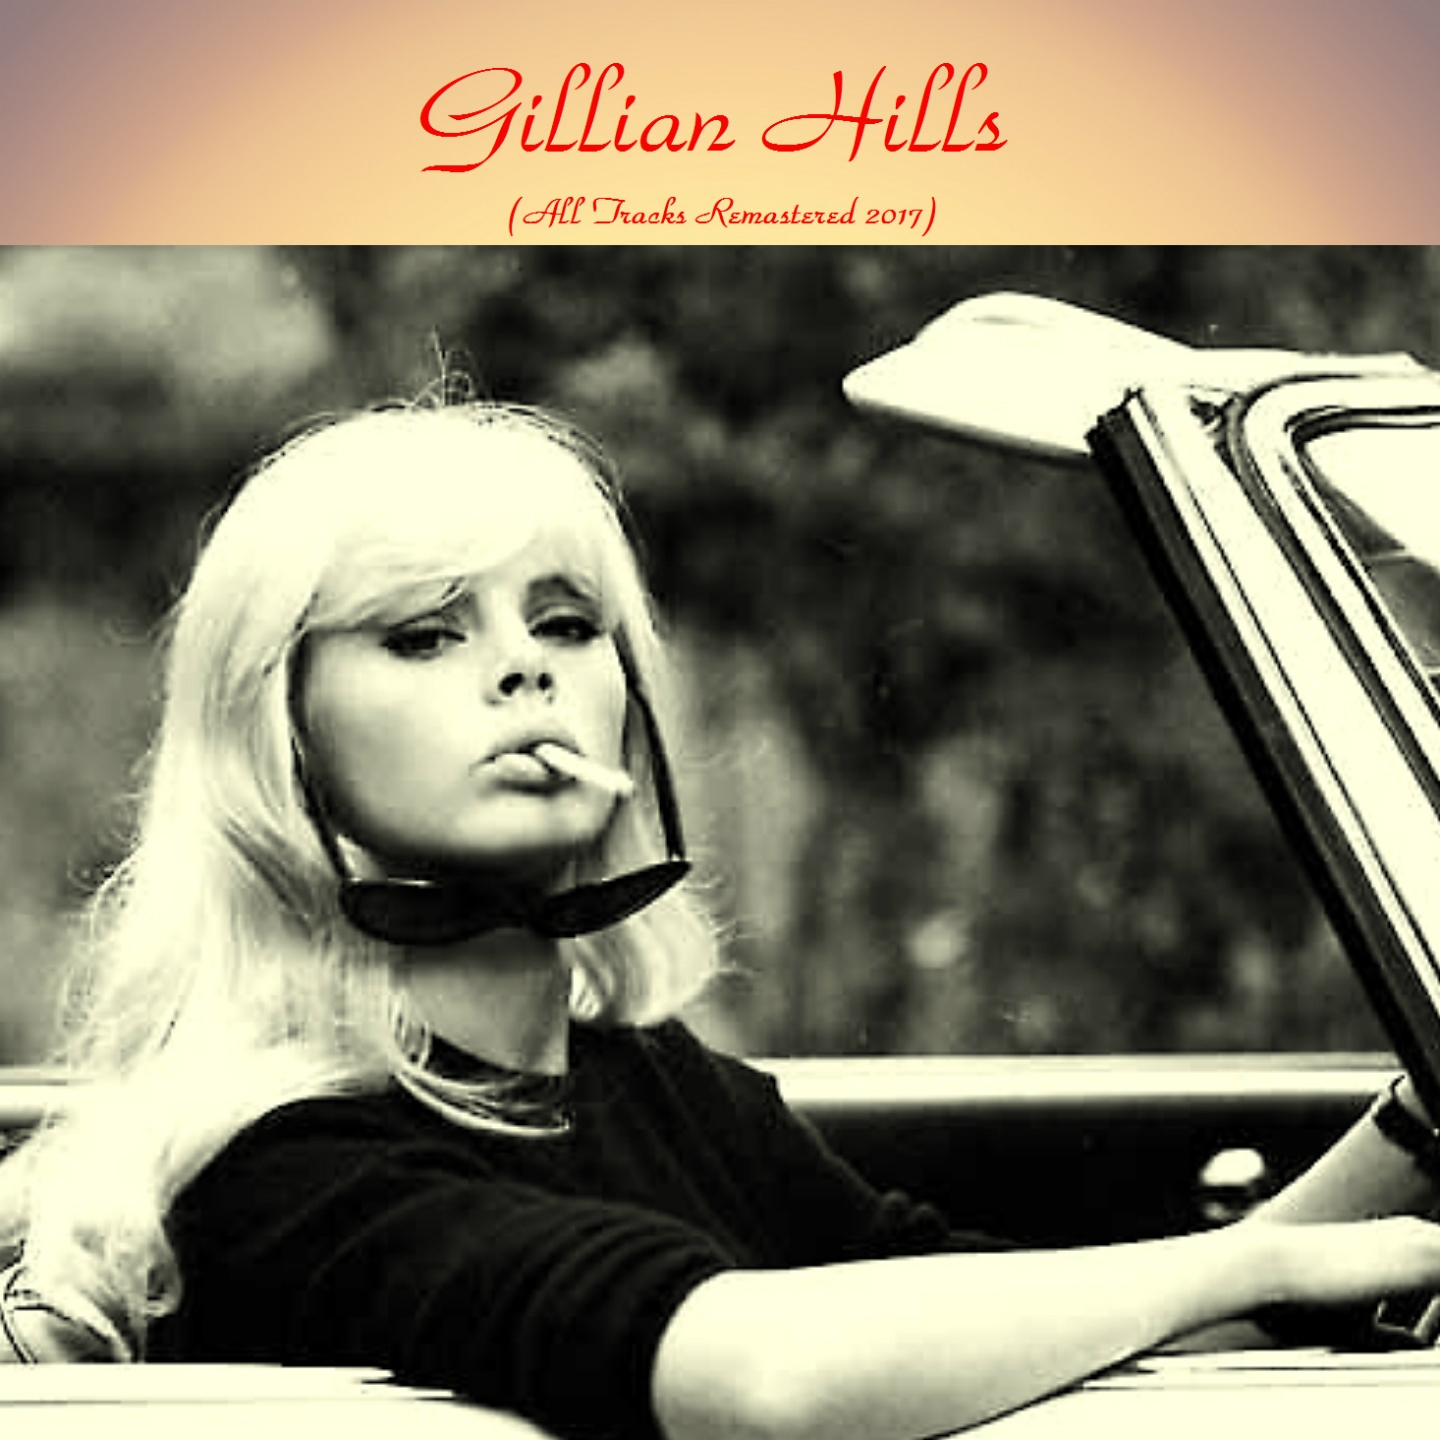 Gillian hills (Remastered 2017)